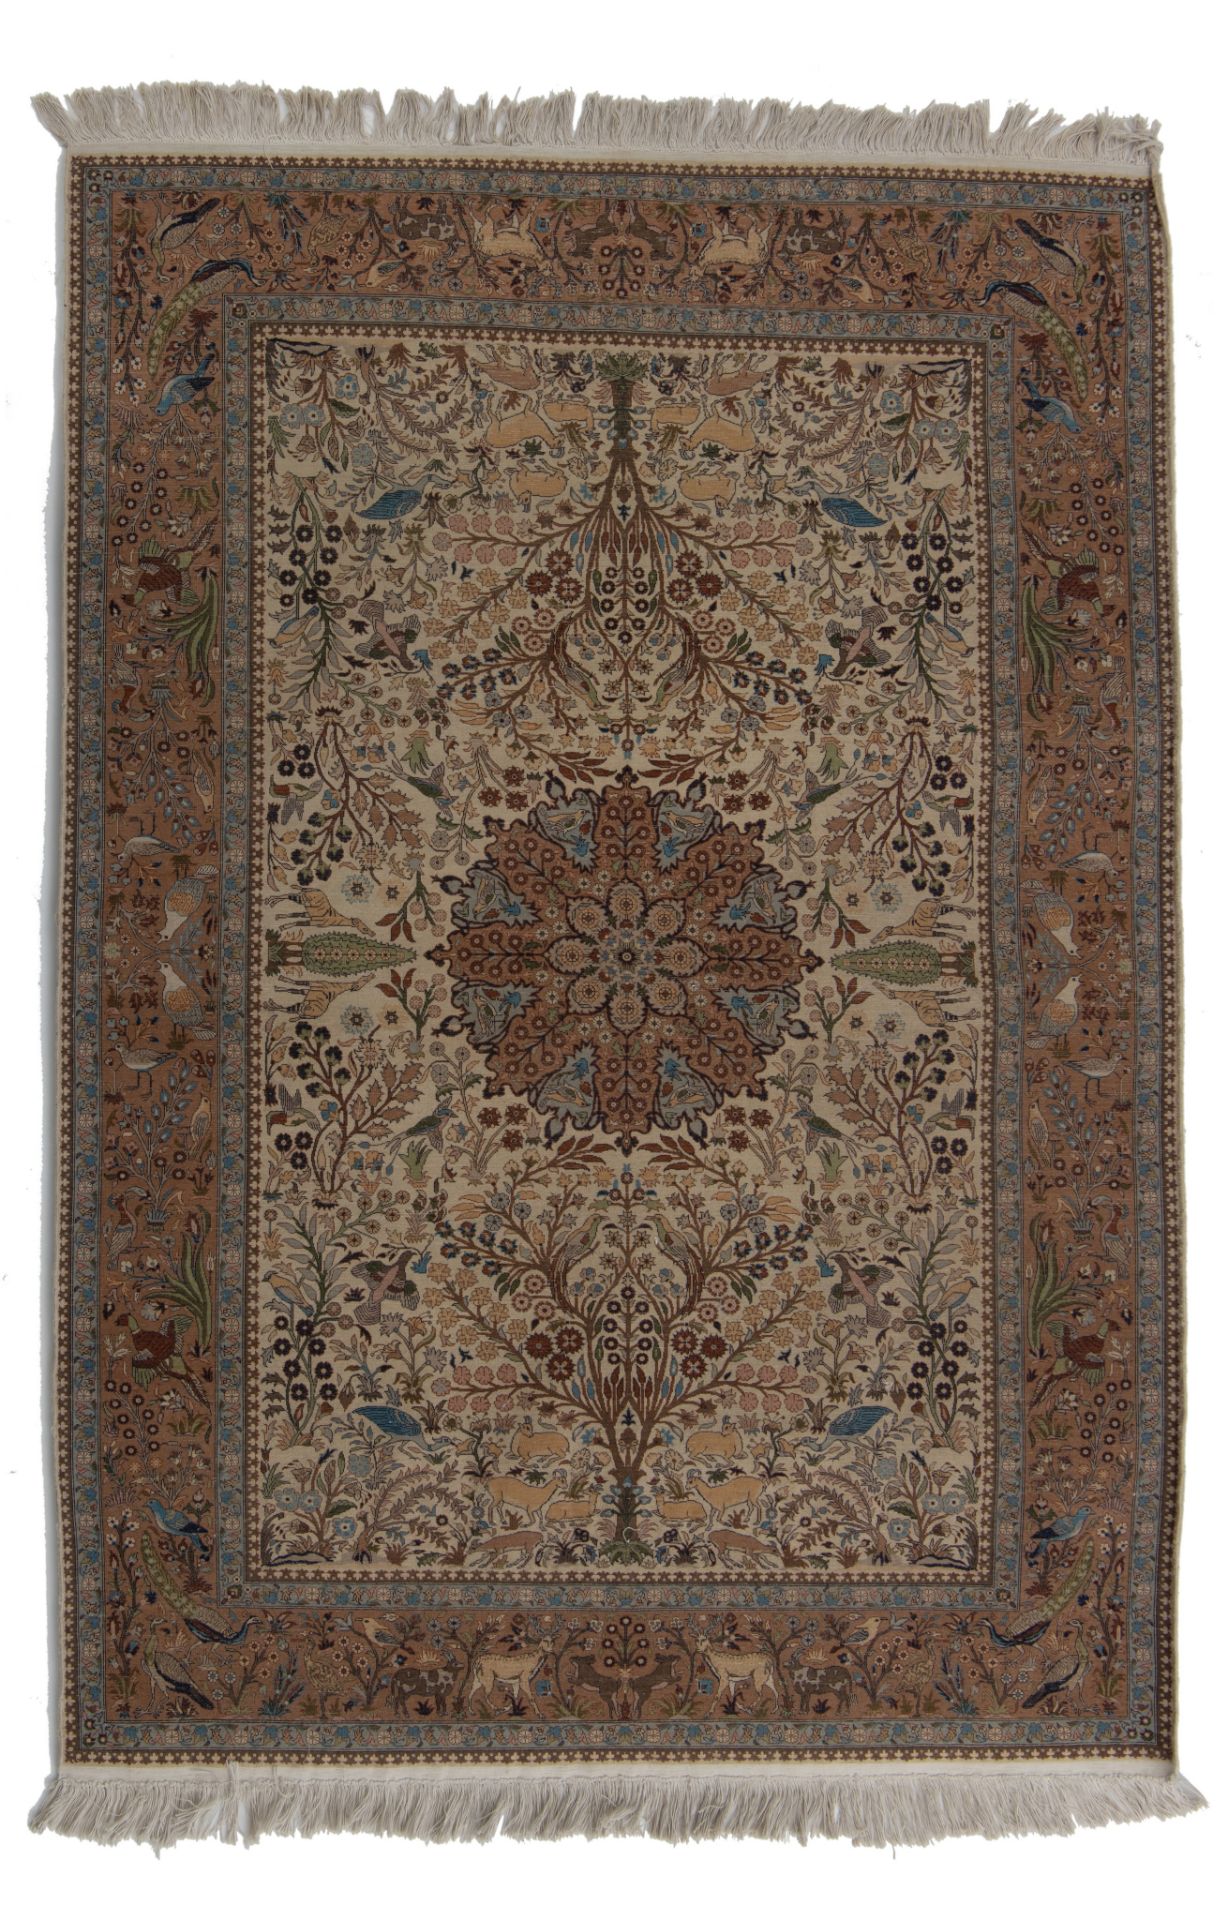 Two Oriental rugs, 123 x 170 / 128 x 180 cm